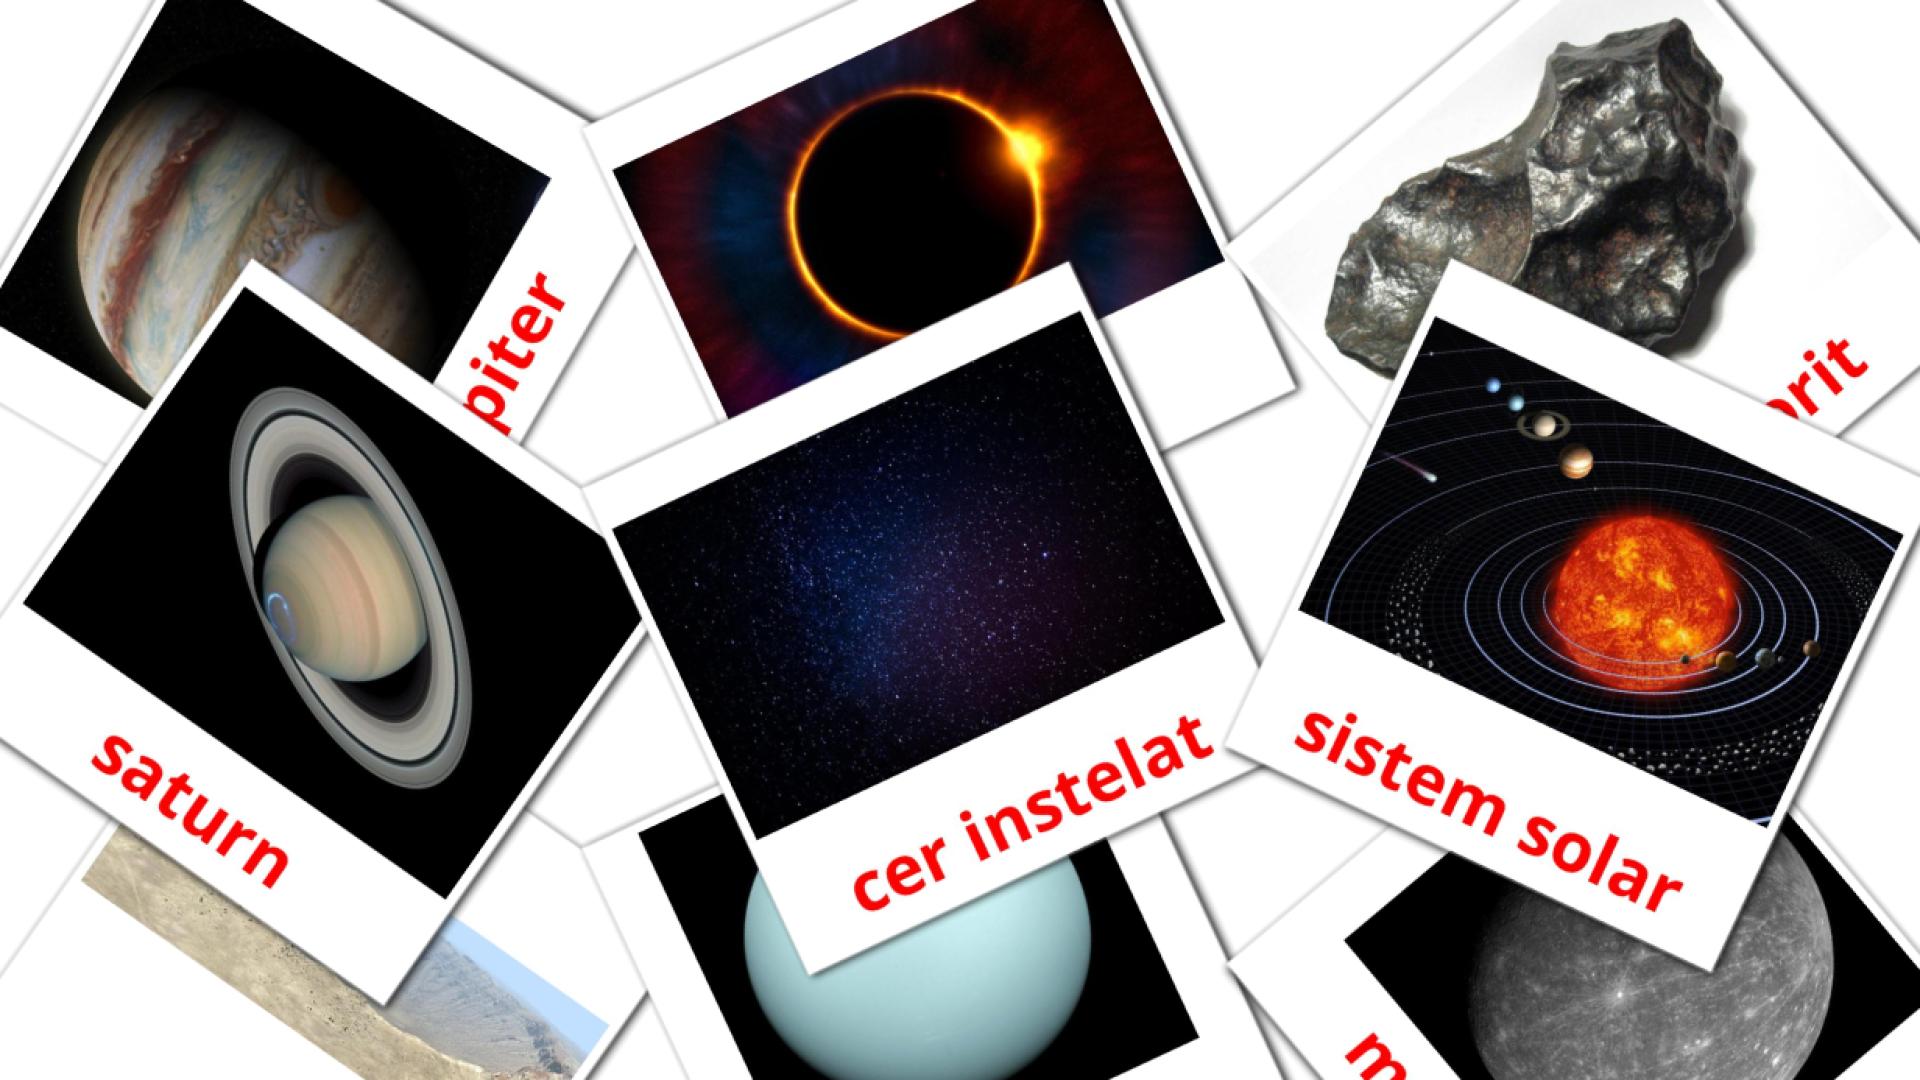 21 Sistemul solar flashcards